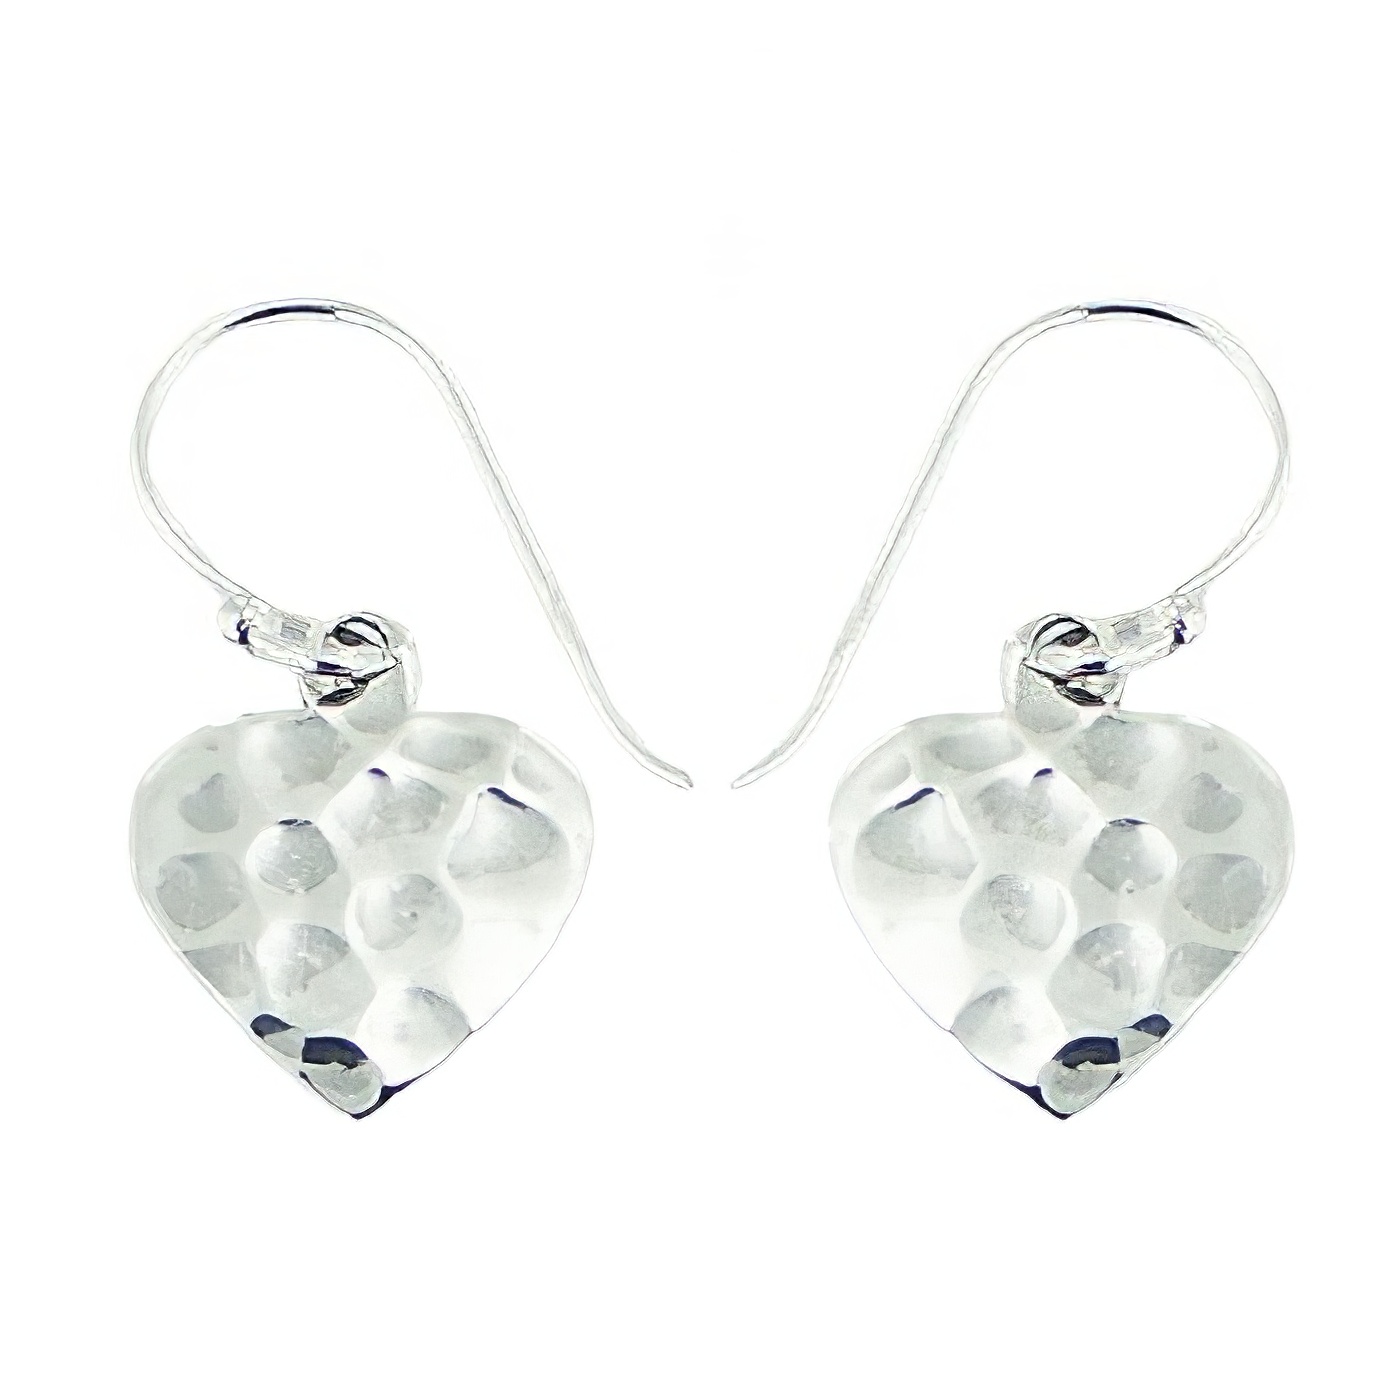 Hammered Effect Sterling Silver Heart Dangle Earrings by BeYindi 